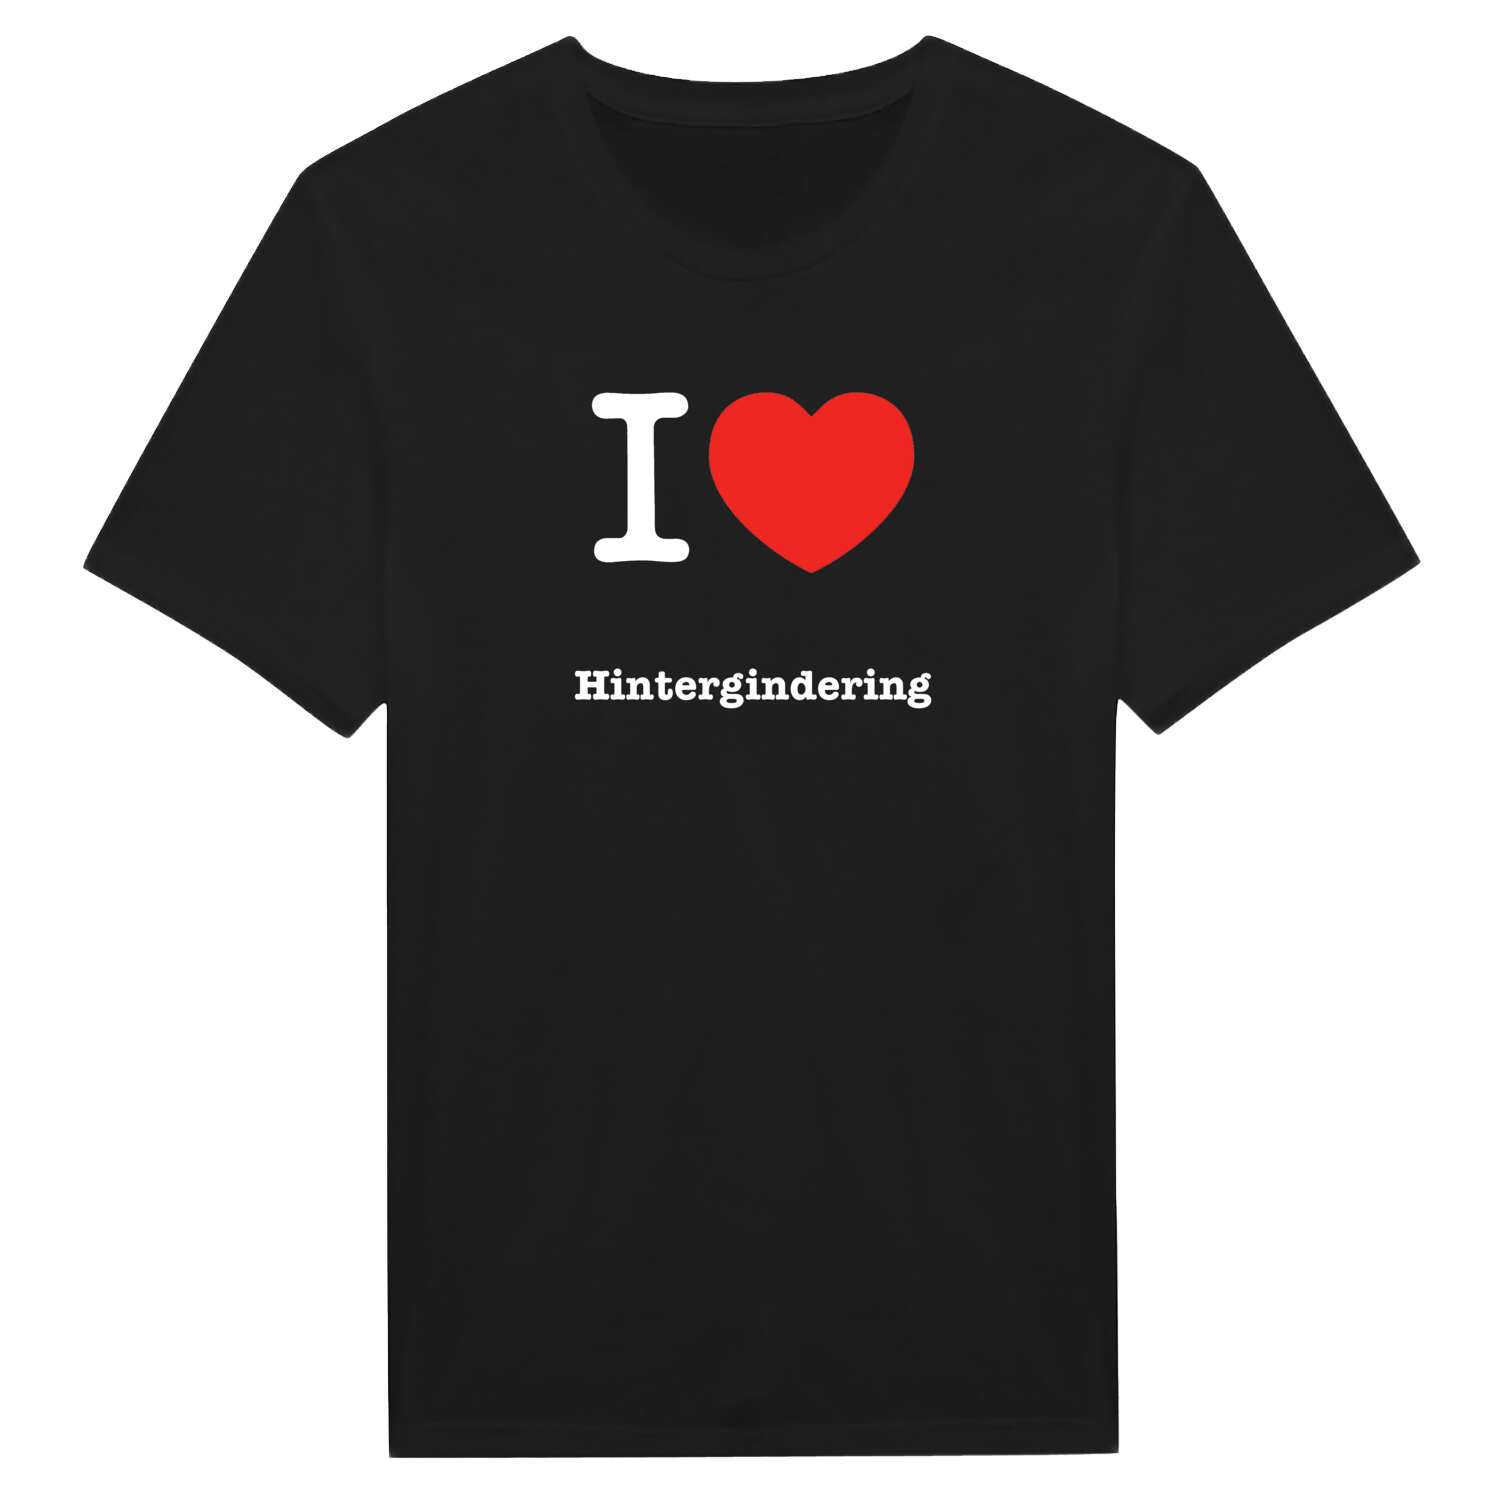 Hintergindering T-Shirt »I love«